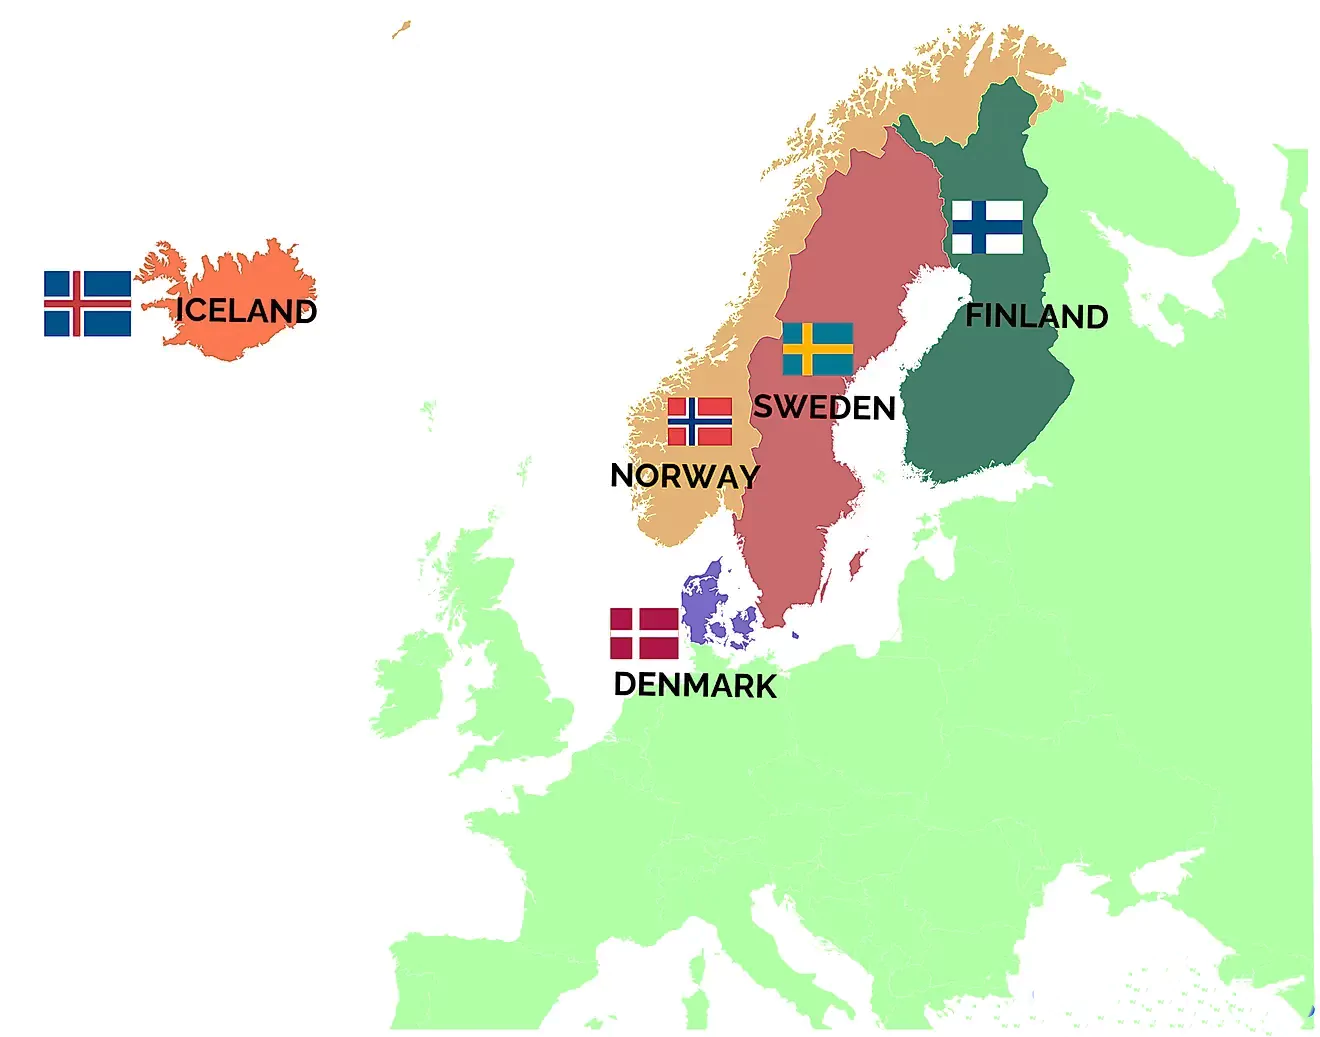 Nordic-Baltic